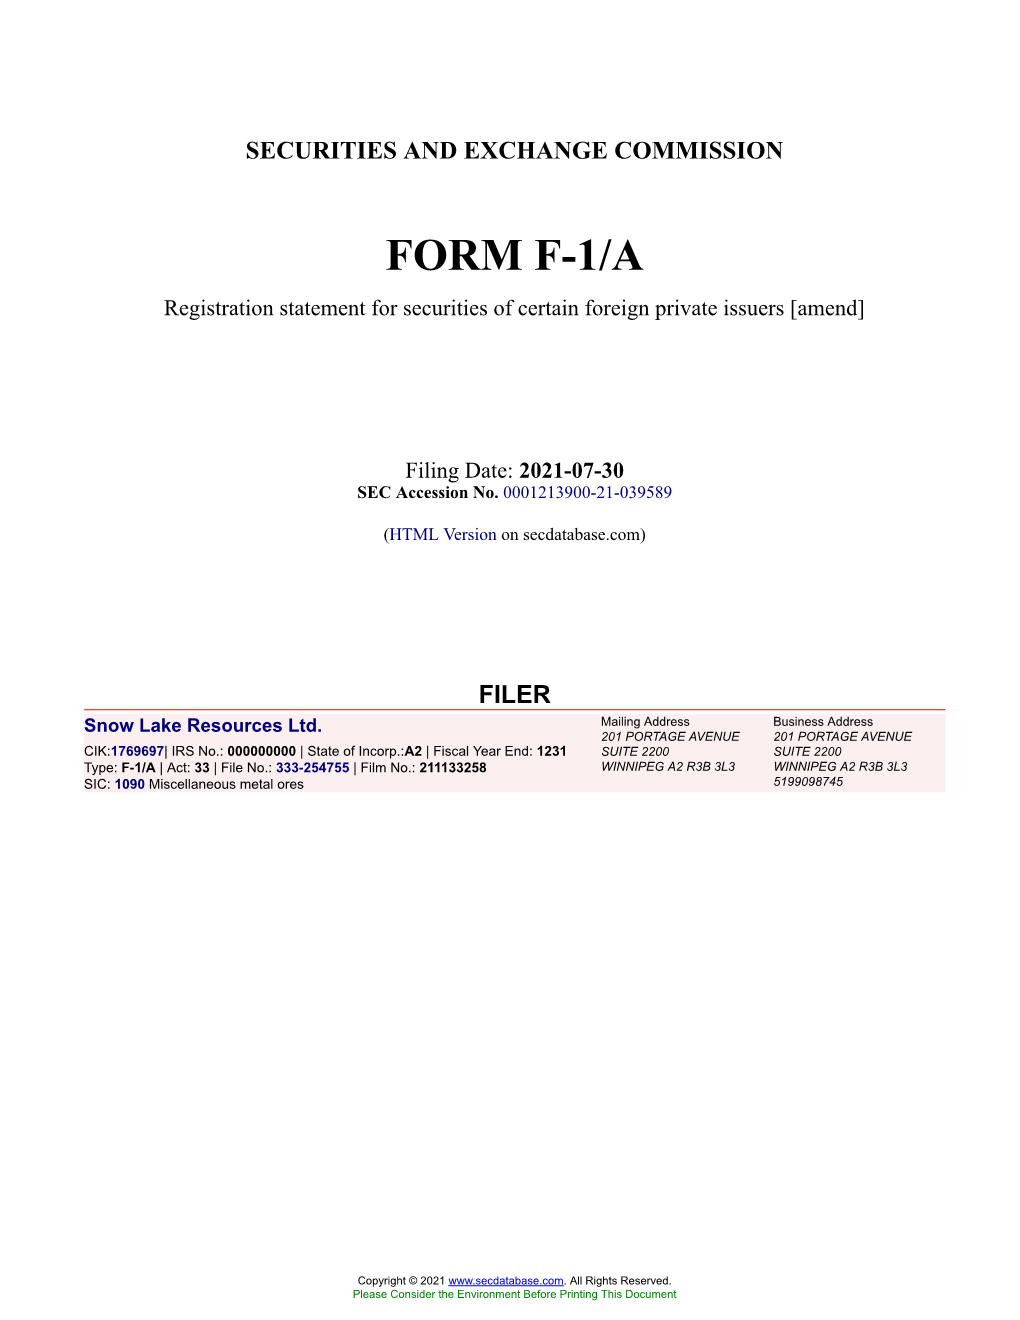 Snow Lake Resources Ltd. Form F-1/A Filed 2021-07-30